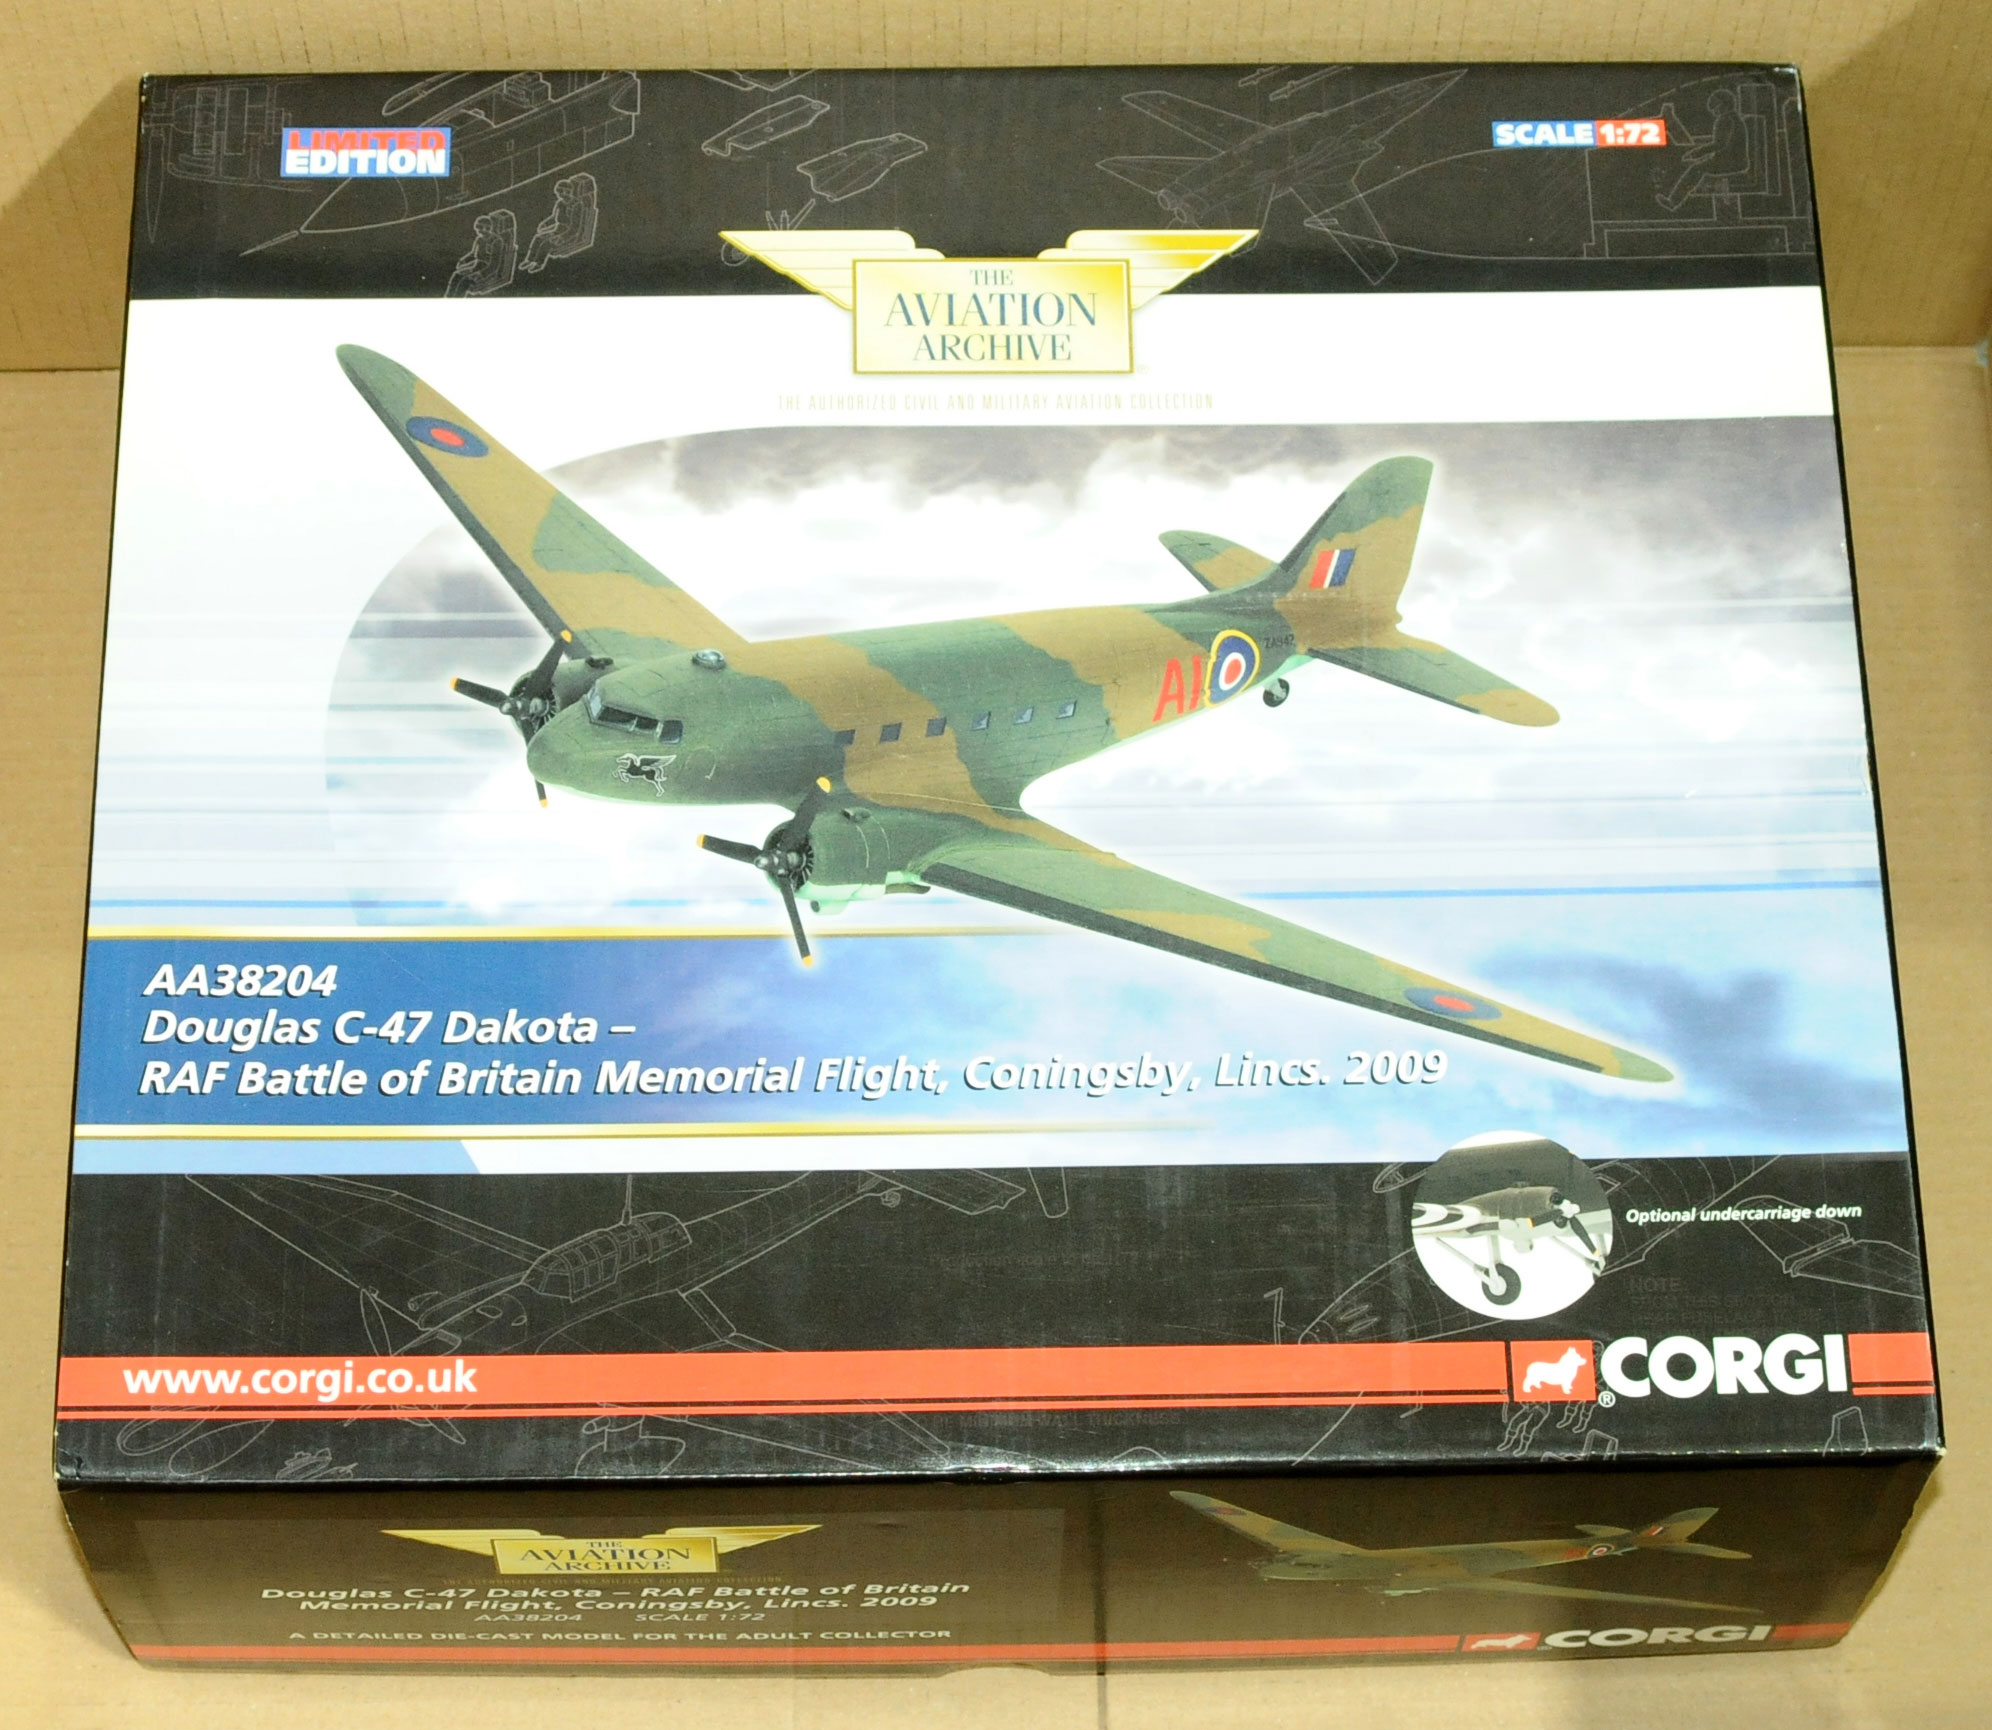 Corgi boxed Aviation Archive 1/72 scale AA38204